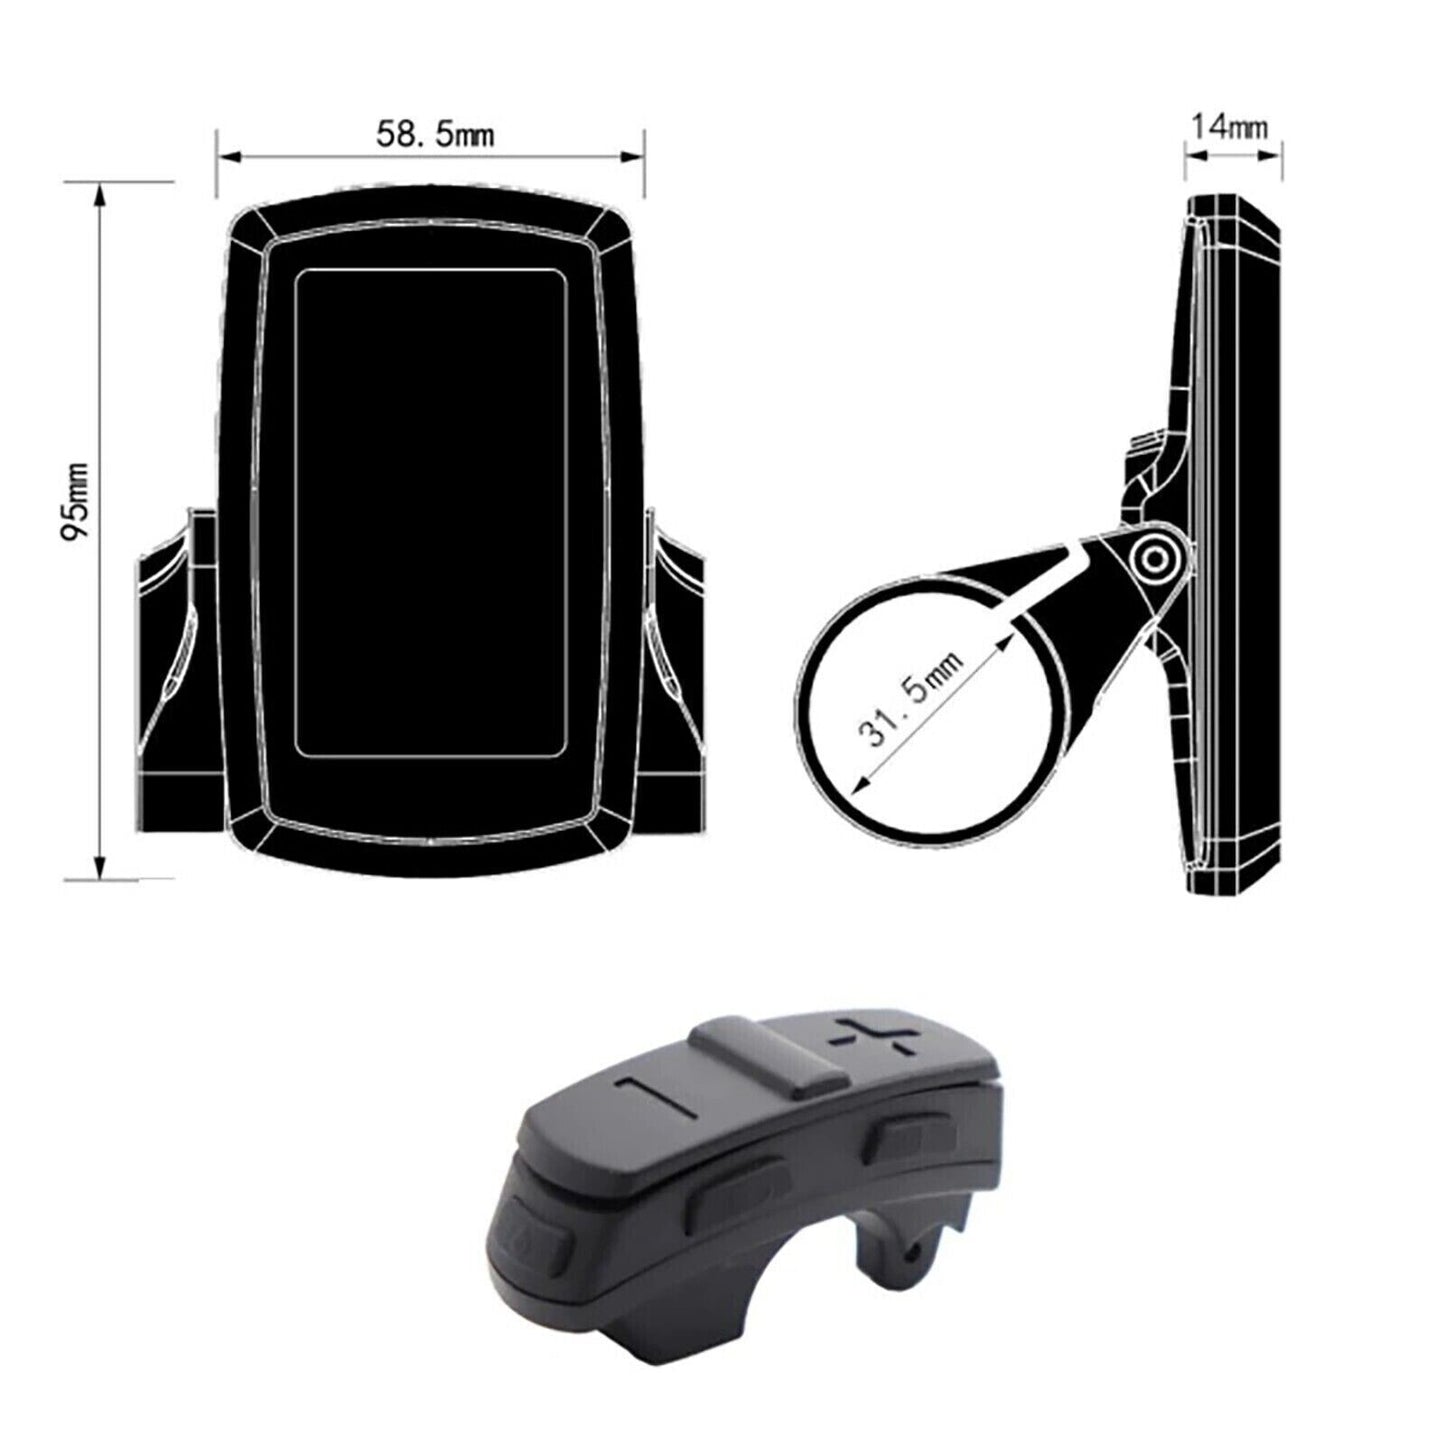 750W 27.5" Rear Hub Conversion Electric Bike Kit, Samsung Cell 48V 20AH Battery